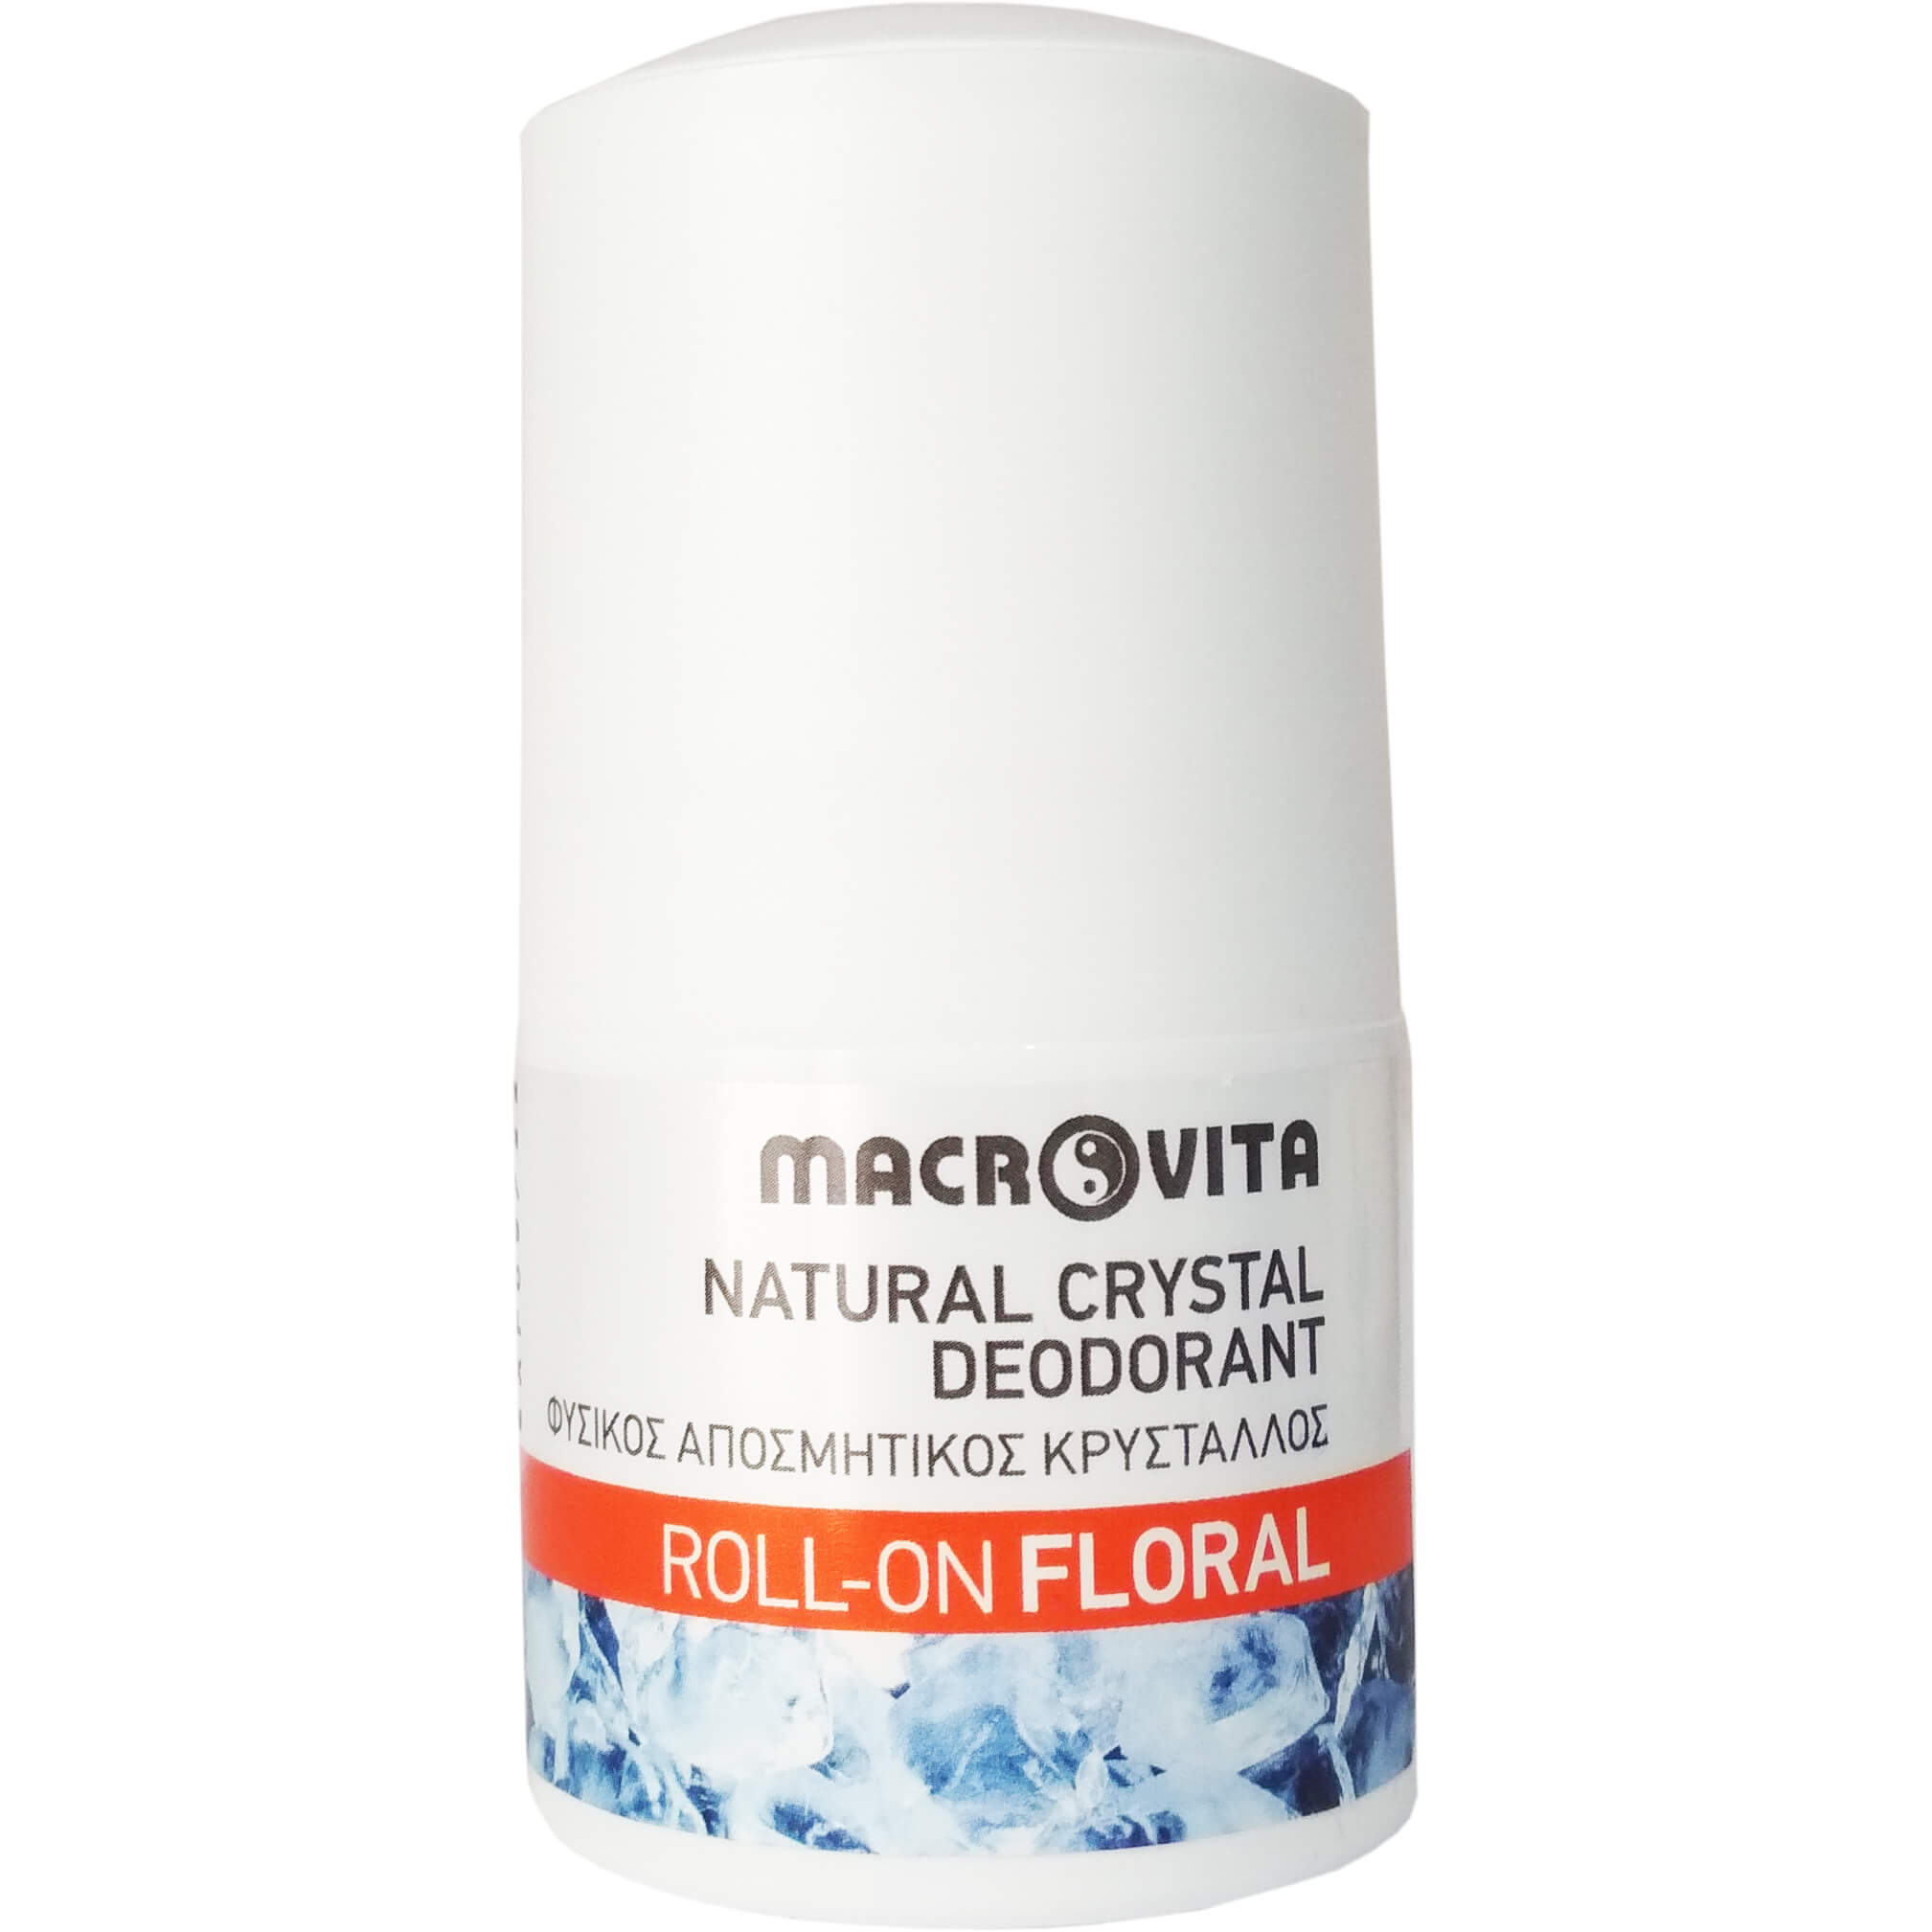 Macrovita Natural Crystal Deodorant Φυσικός Αποσμητικός Κρύσταλλος Roll-On Άρωμα Floral 50ml